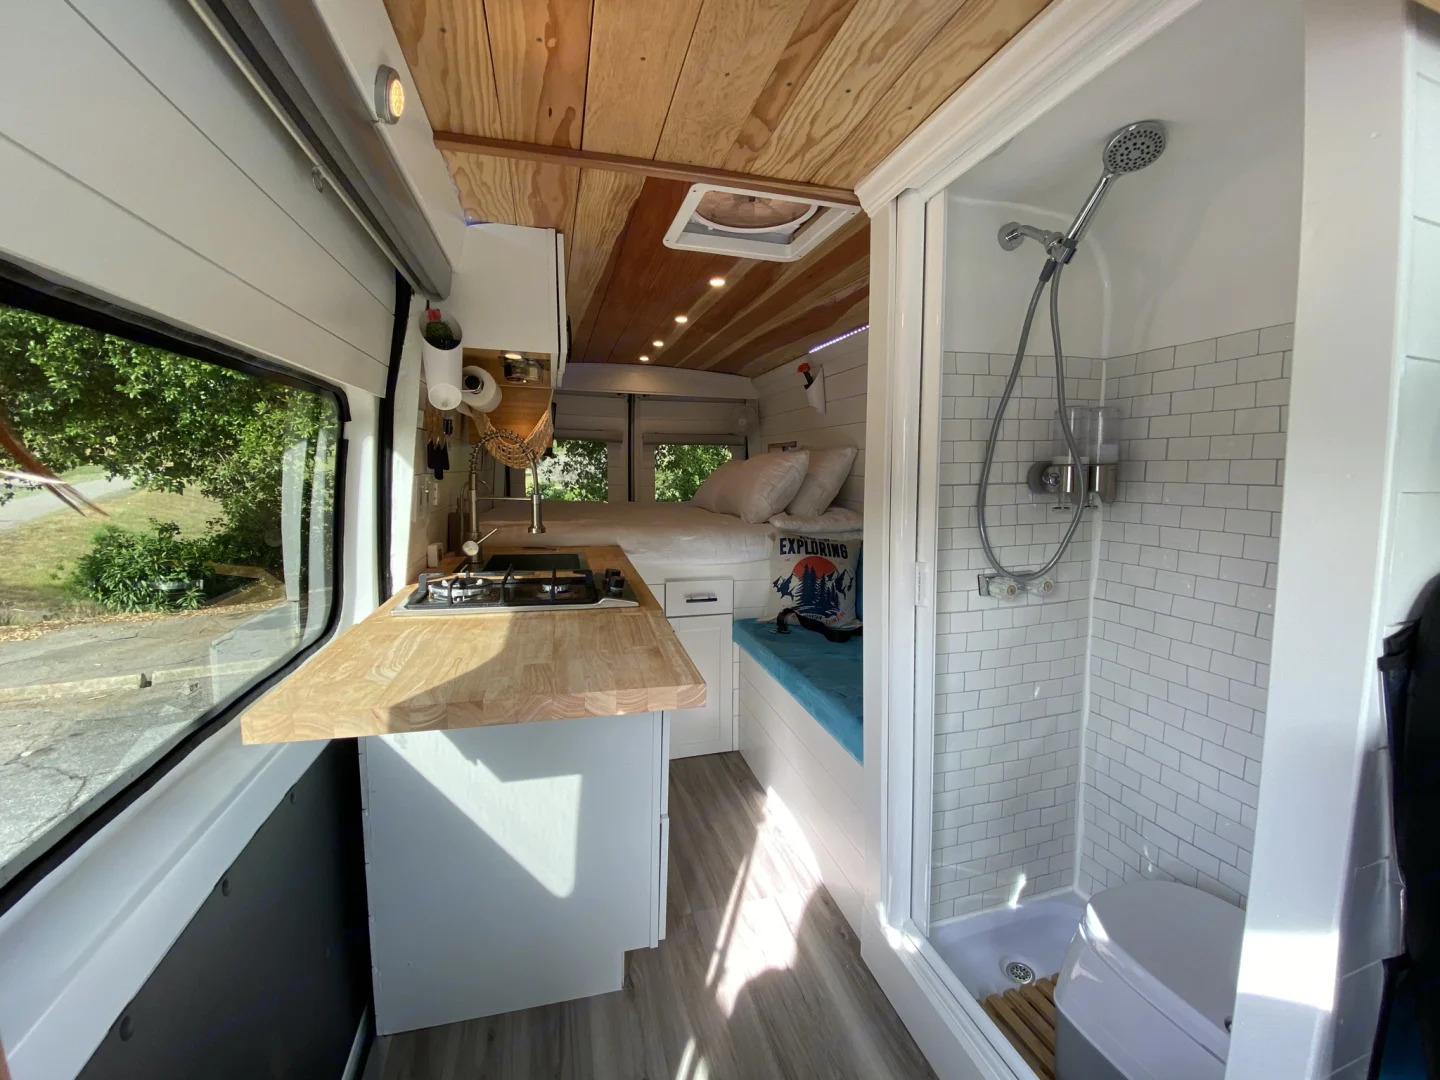 Luxury custom campervan interior